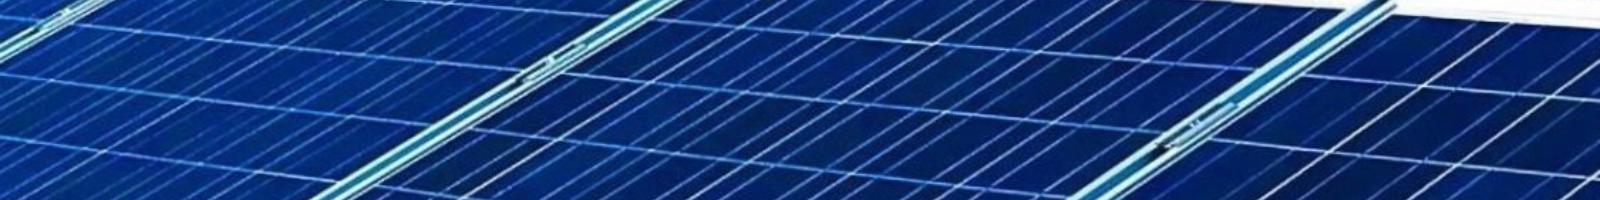 Solar Panels 2 200319 212012